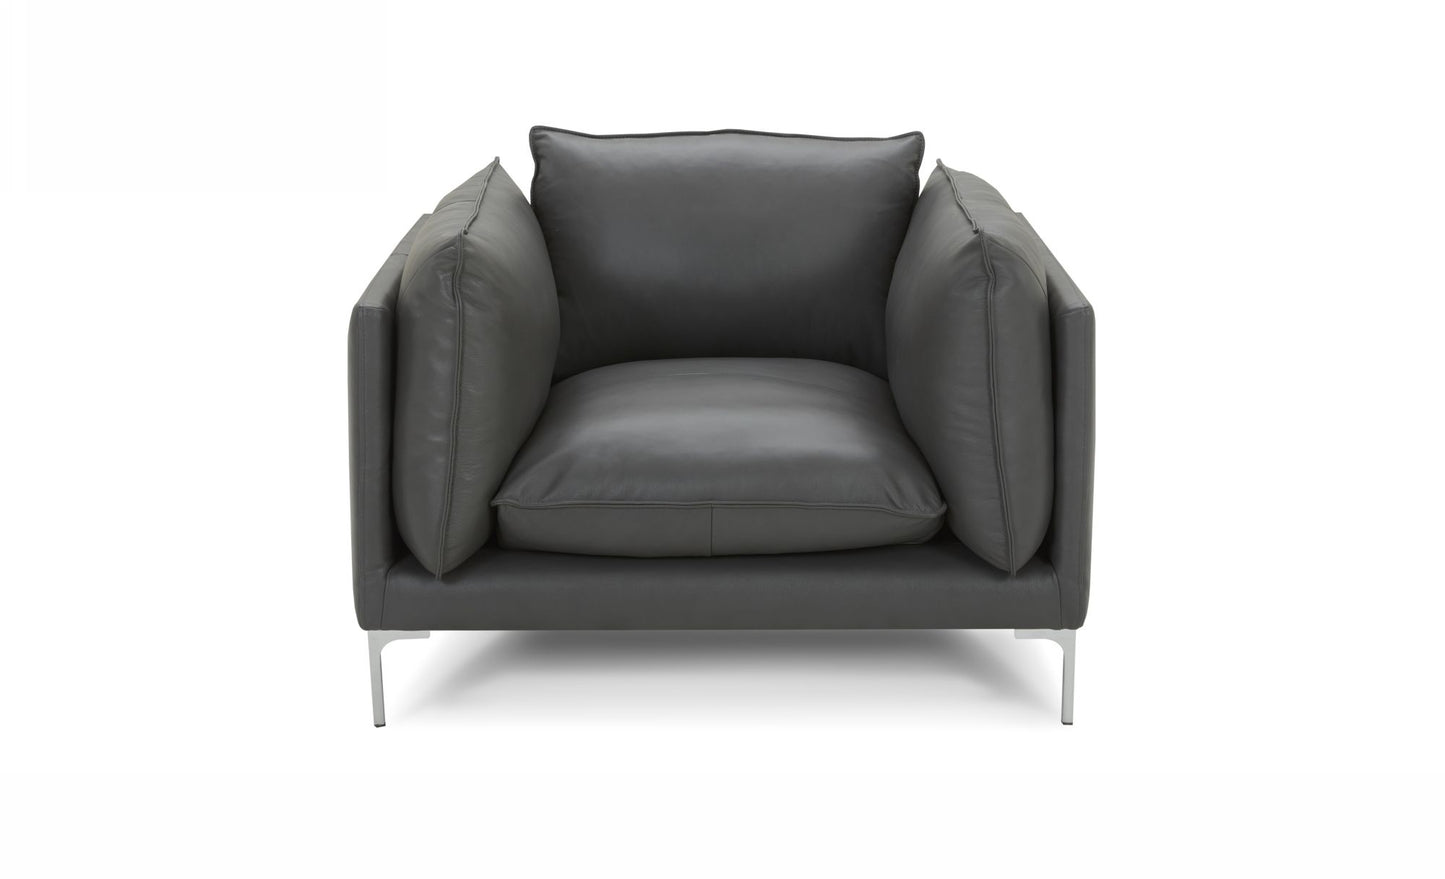 Divani Casa Harvest - Modern Grey Full Leather Sofa Set